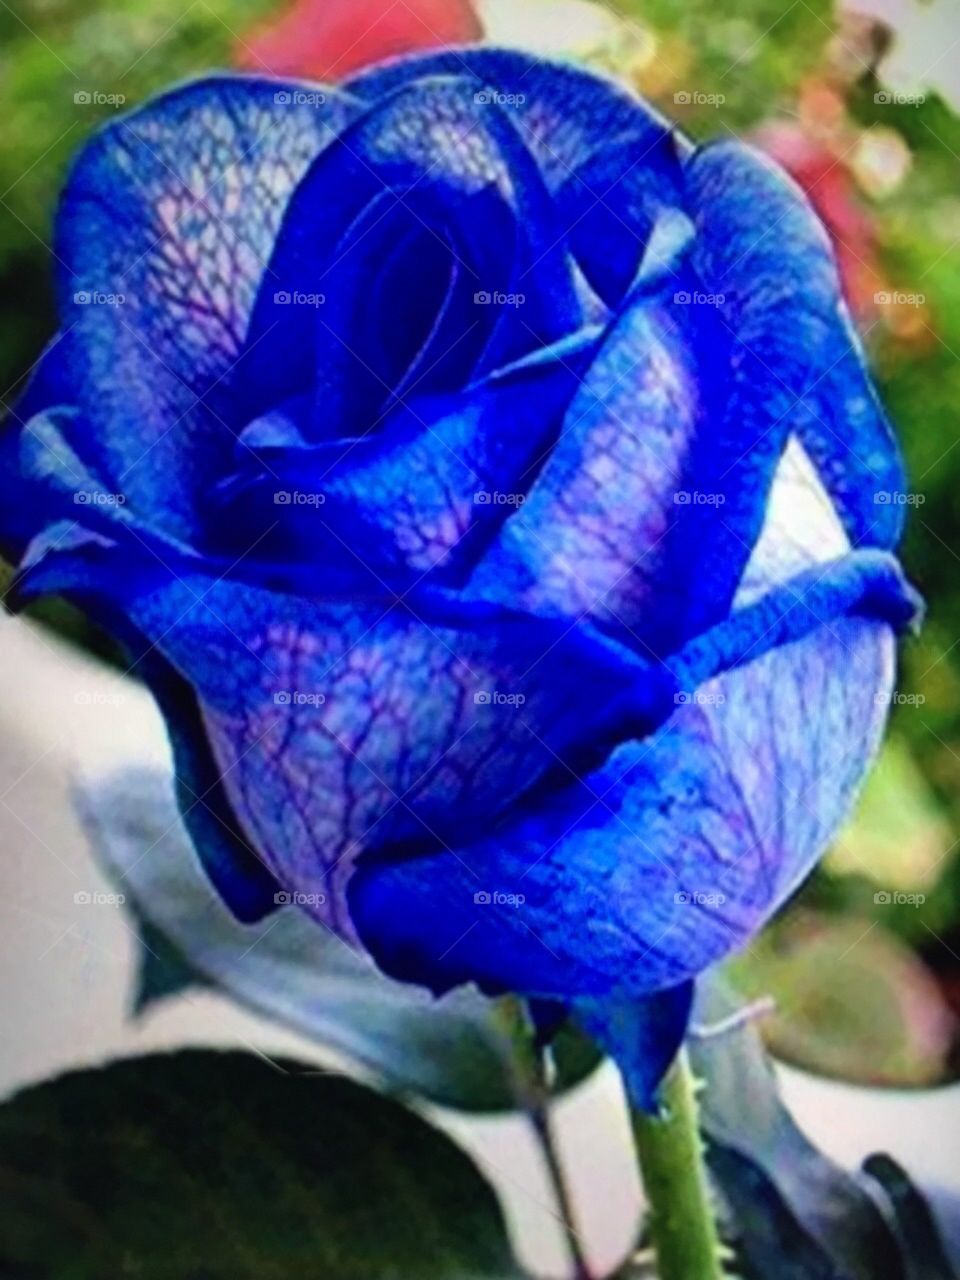 I saw Blue rose